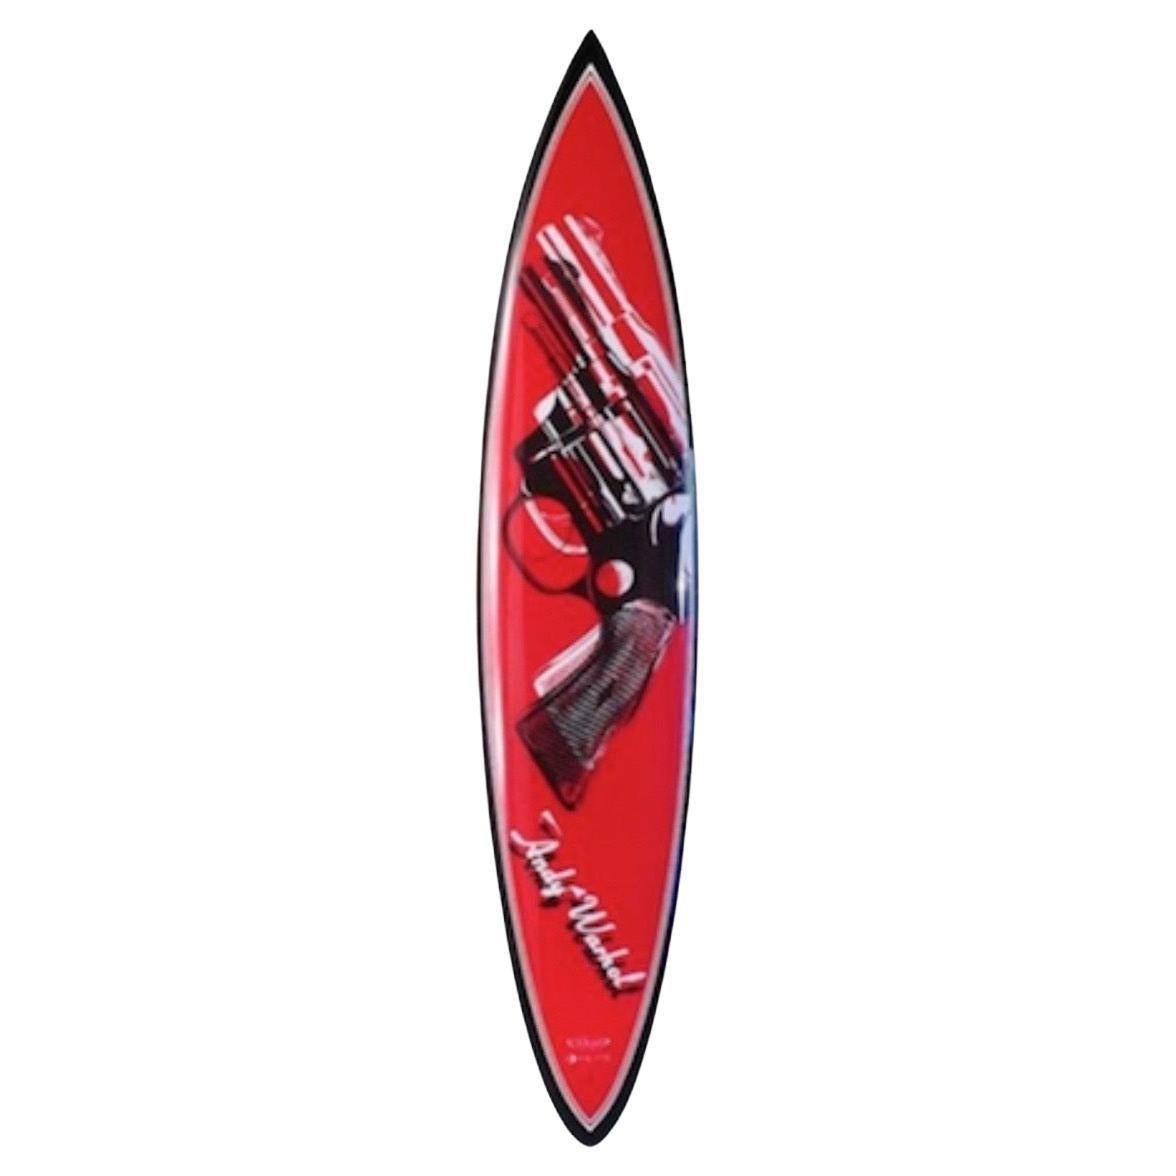 Planche de surf / sculpture Revolver d'Andy Warhol et Tim Bessell en vente